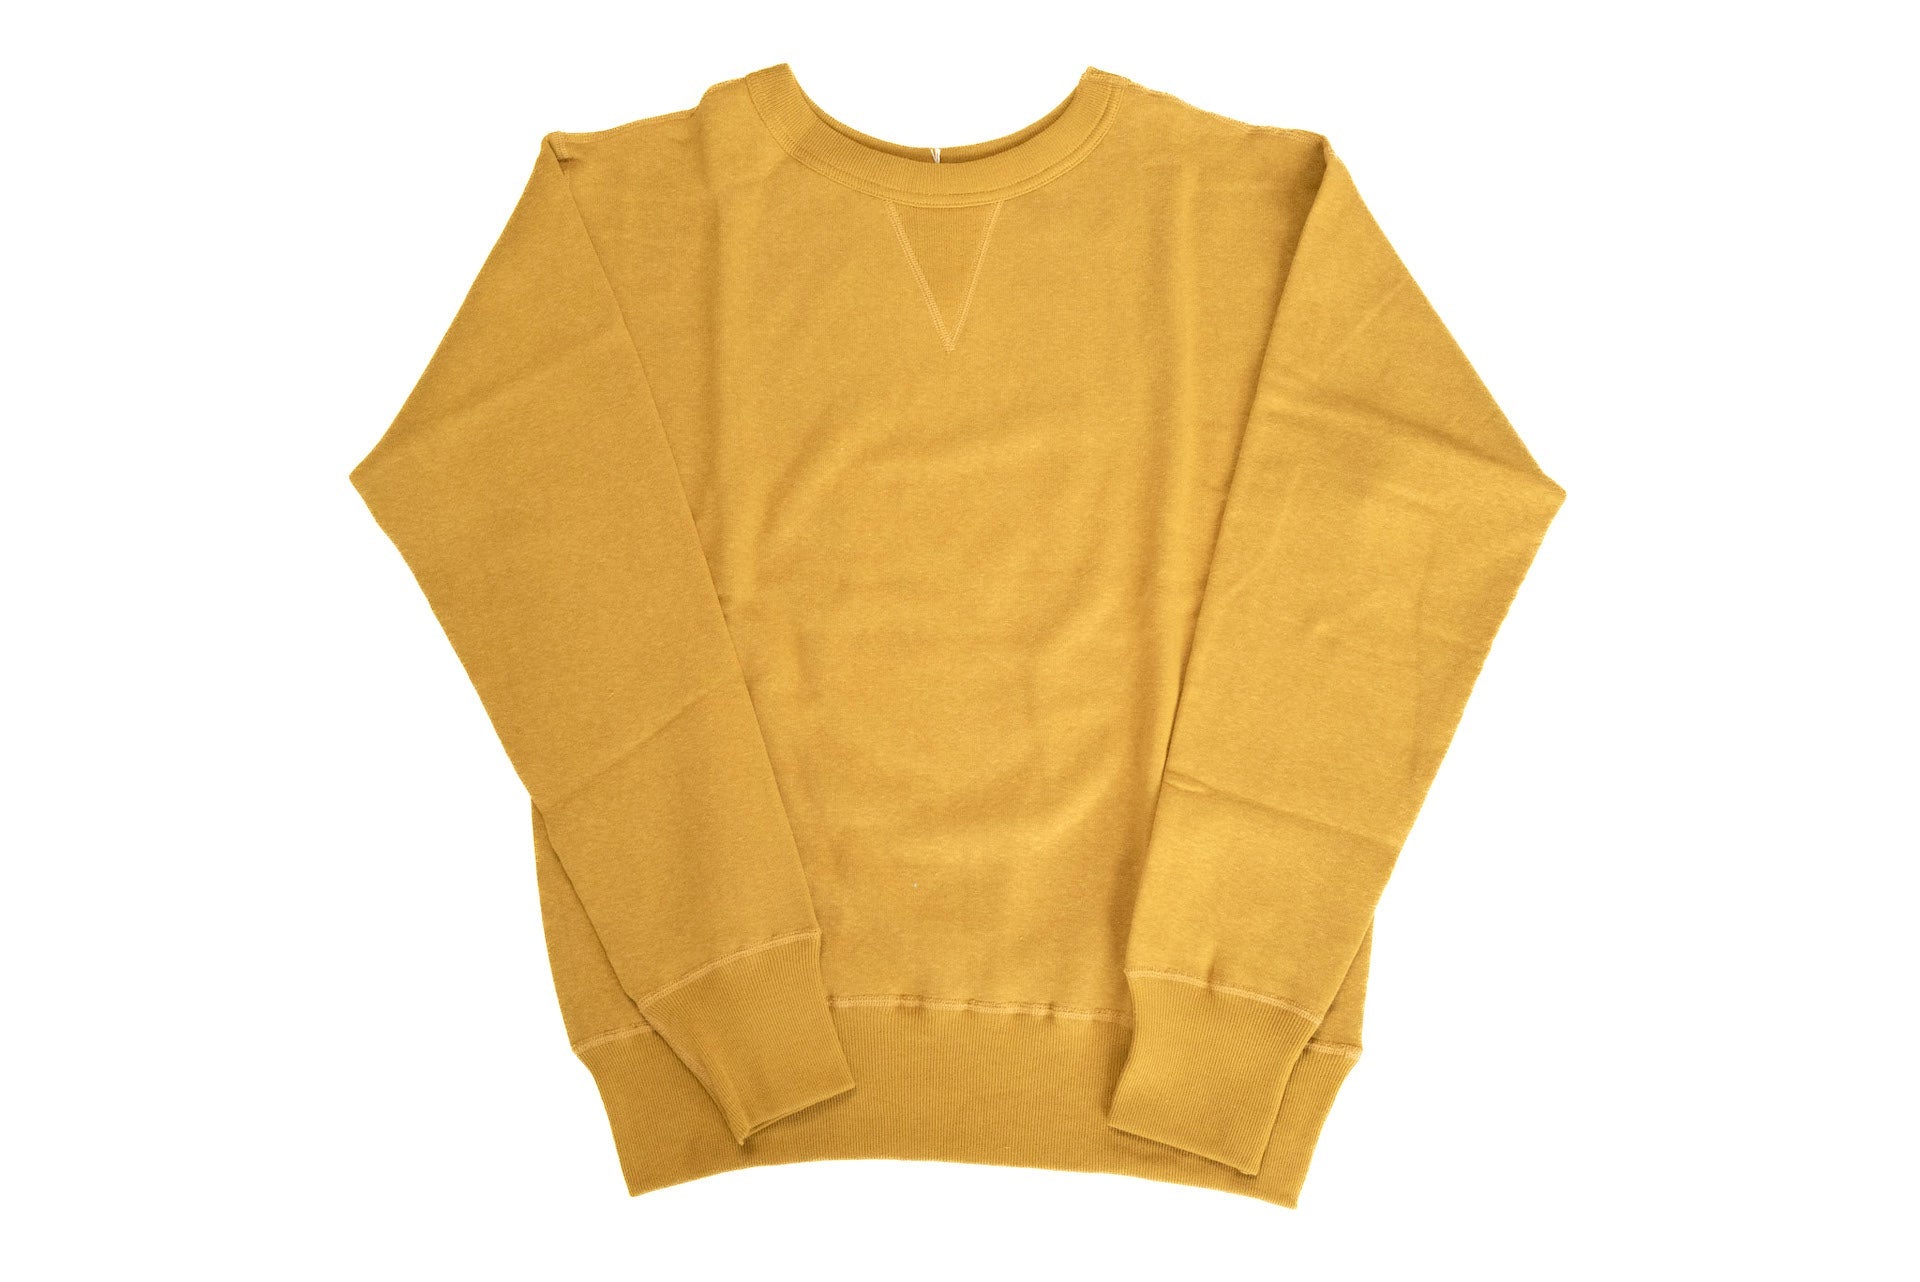 Denime X Warehouse Co Lot.260 10oz "Standard" Loopwheeled Sweatshirt (Yellow)